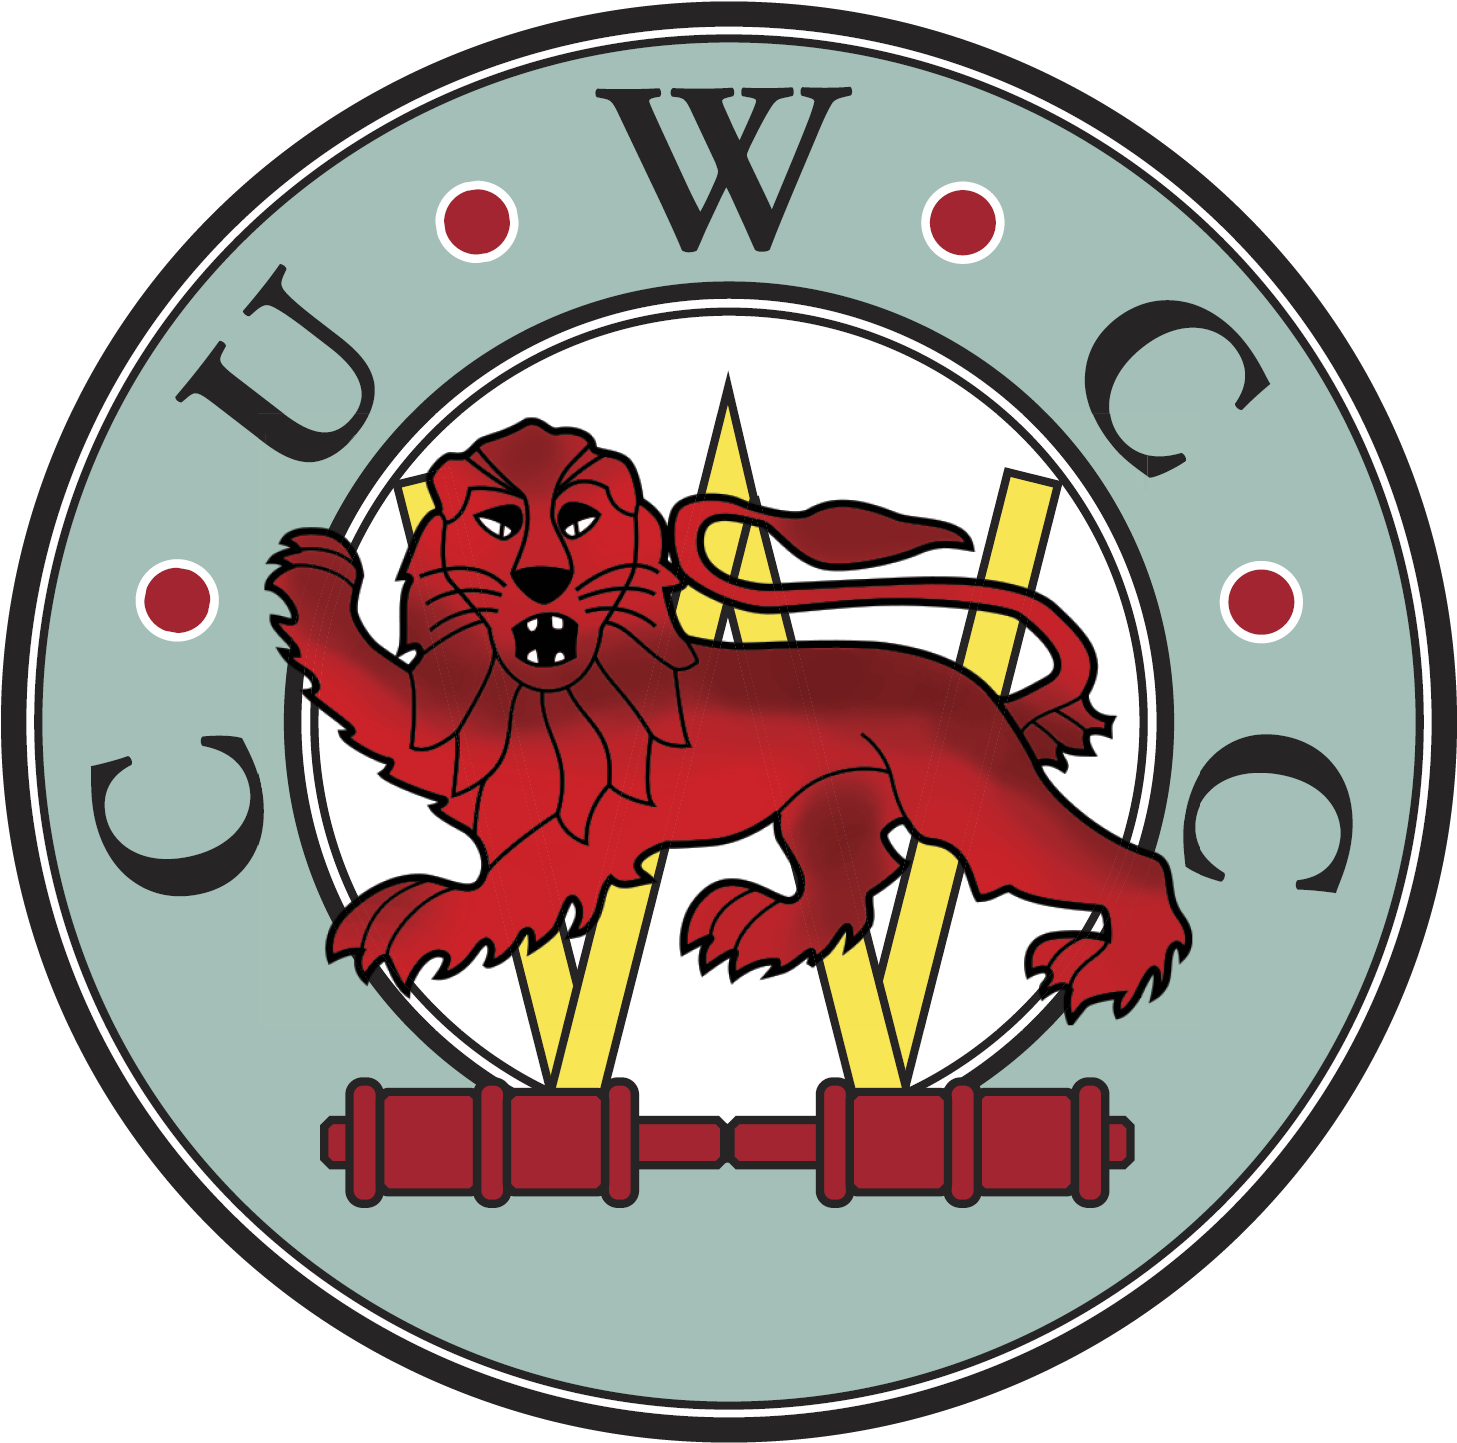 Cuwcc V Ouwcc - Cambridge University Cricket Club (1500x1500)